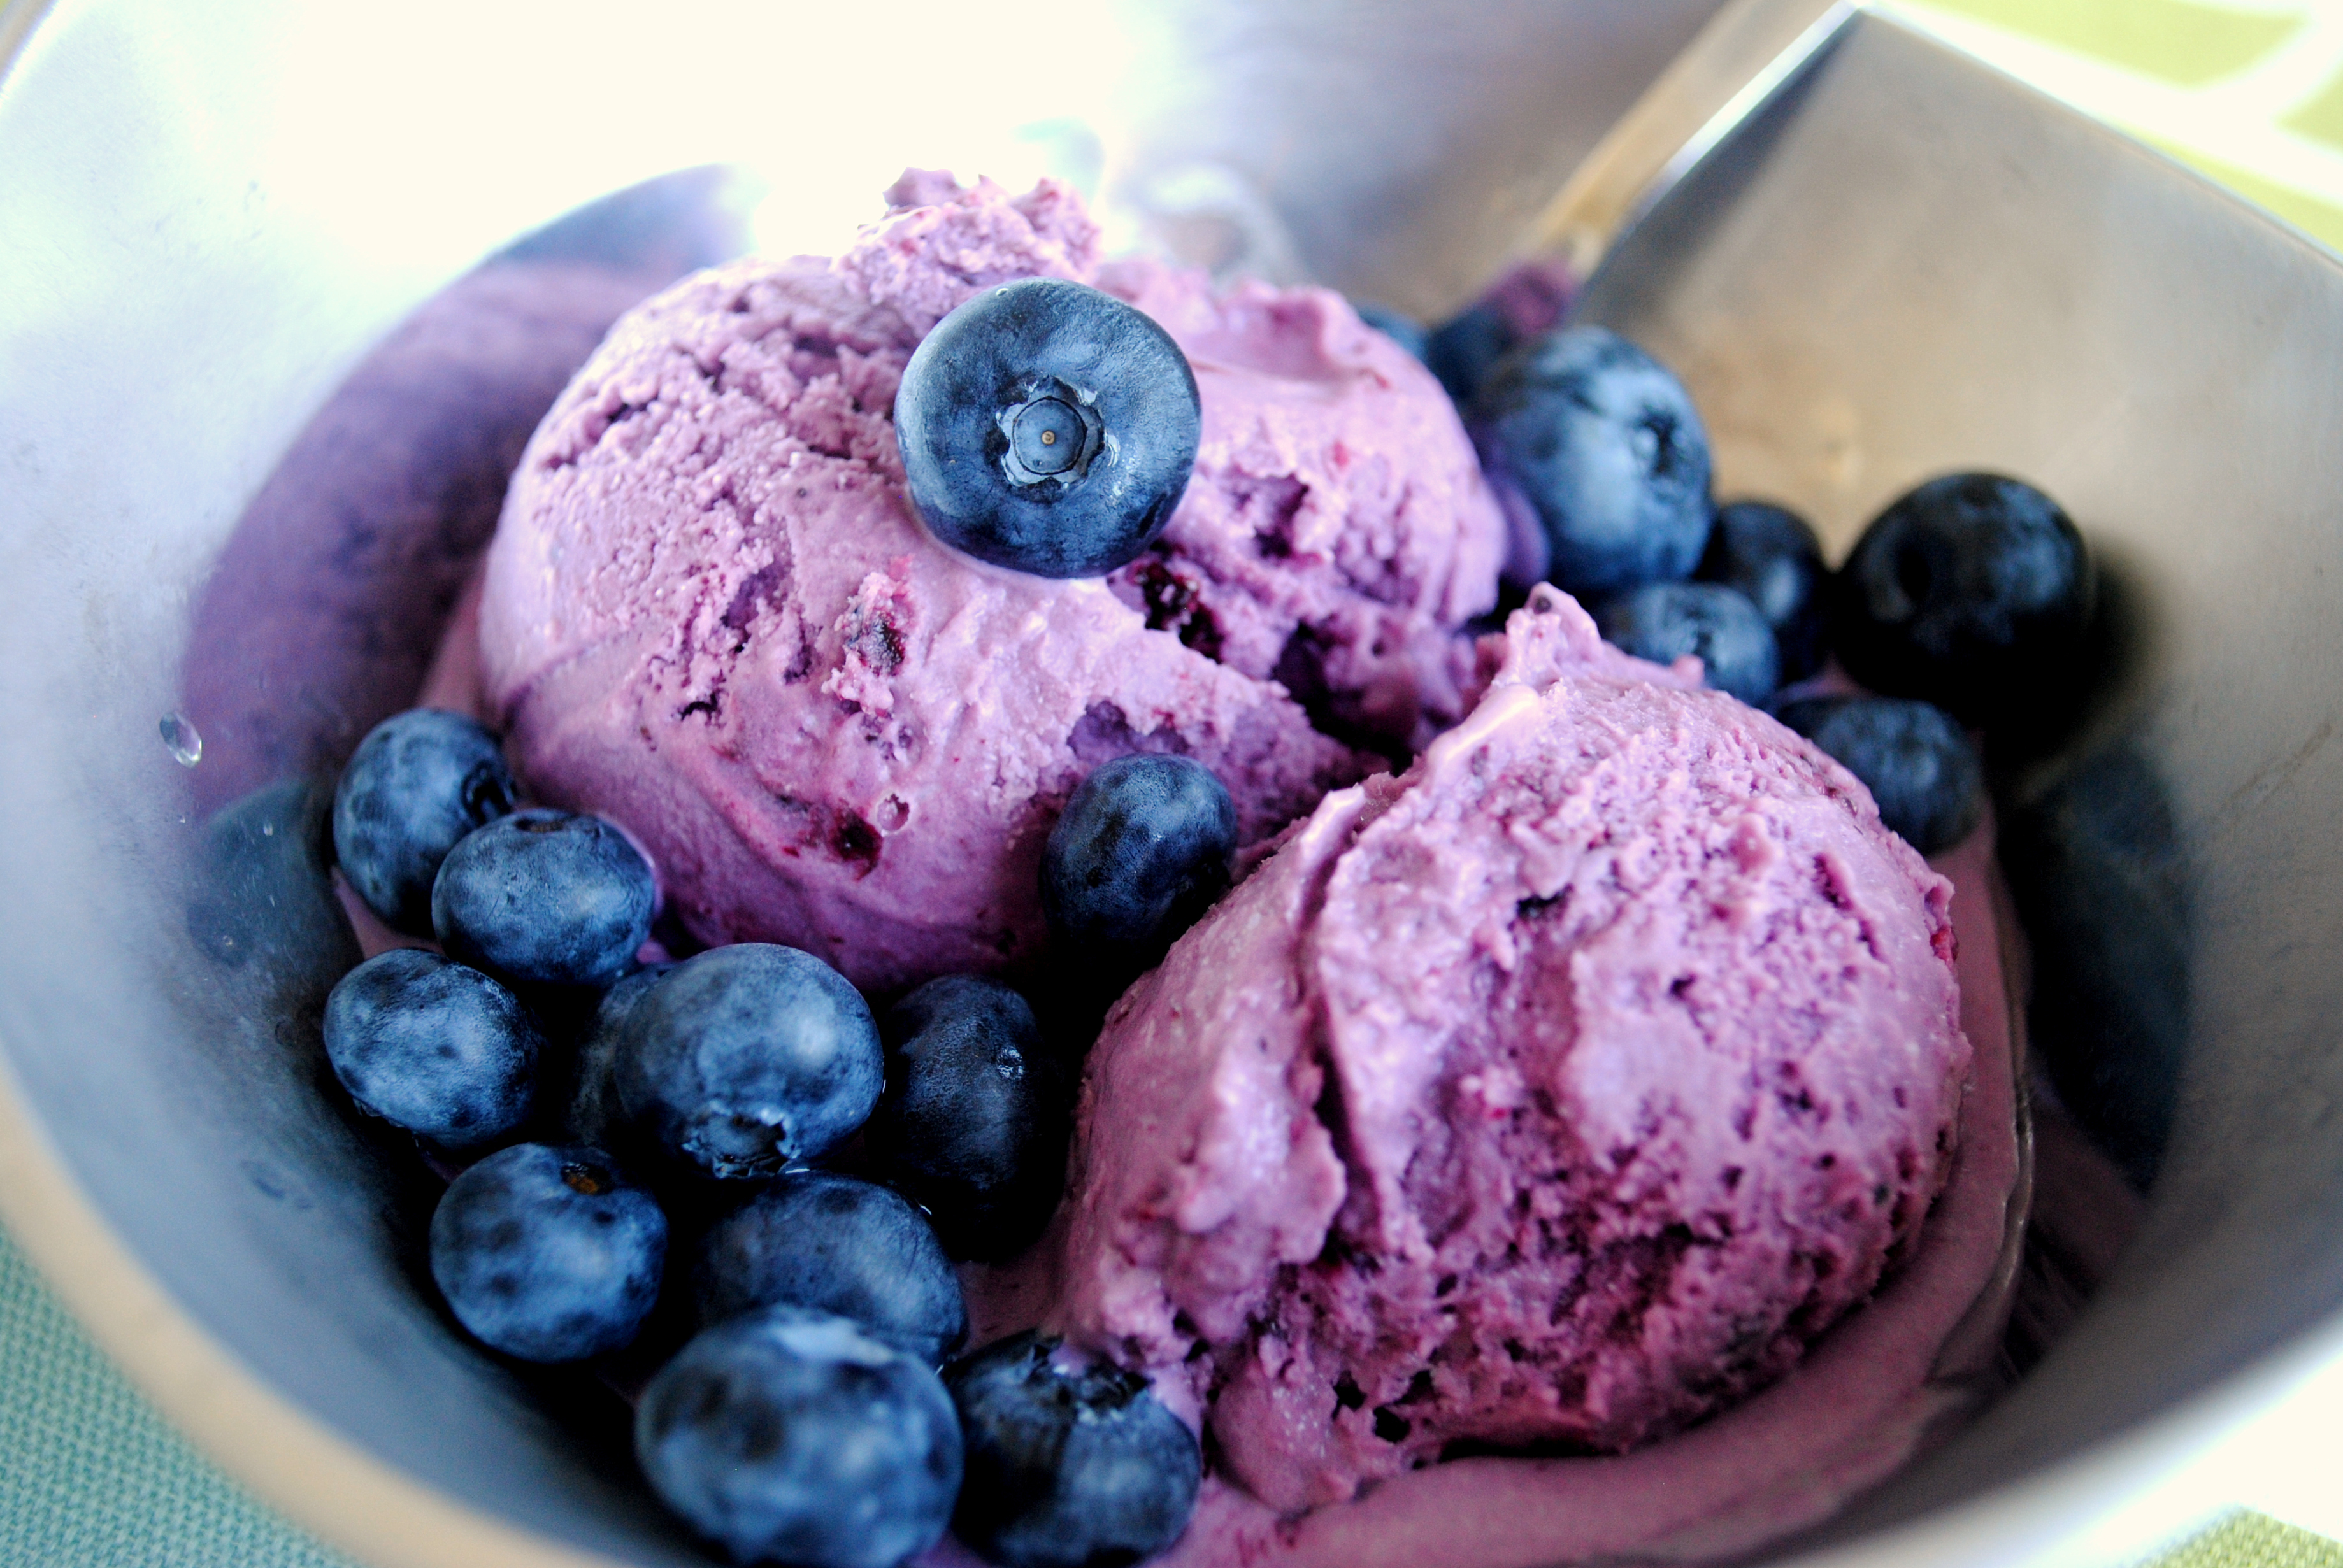 мороженое цветное ice cream color бесплатно